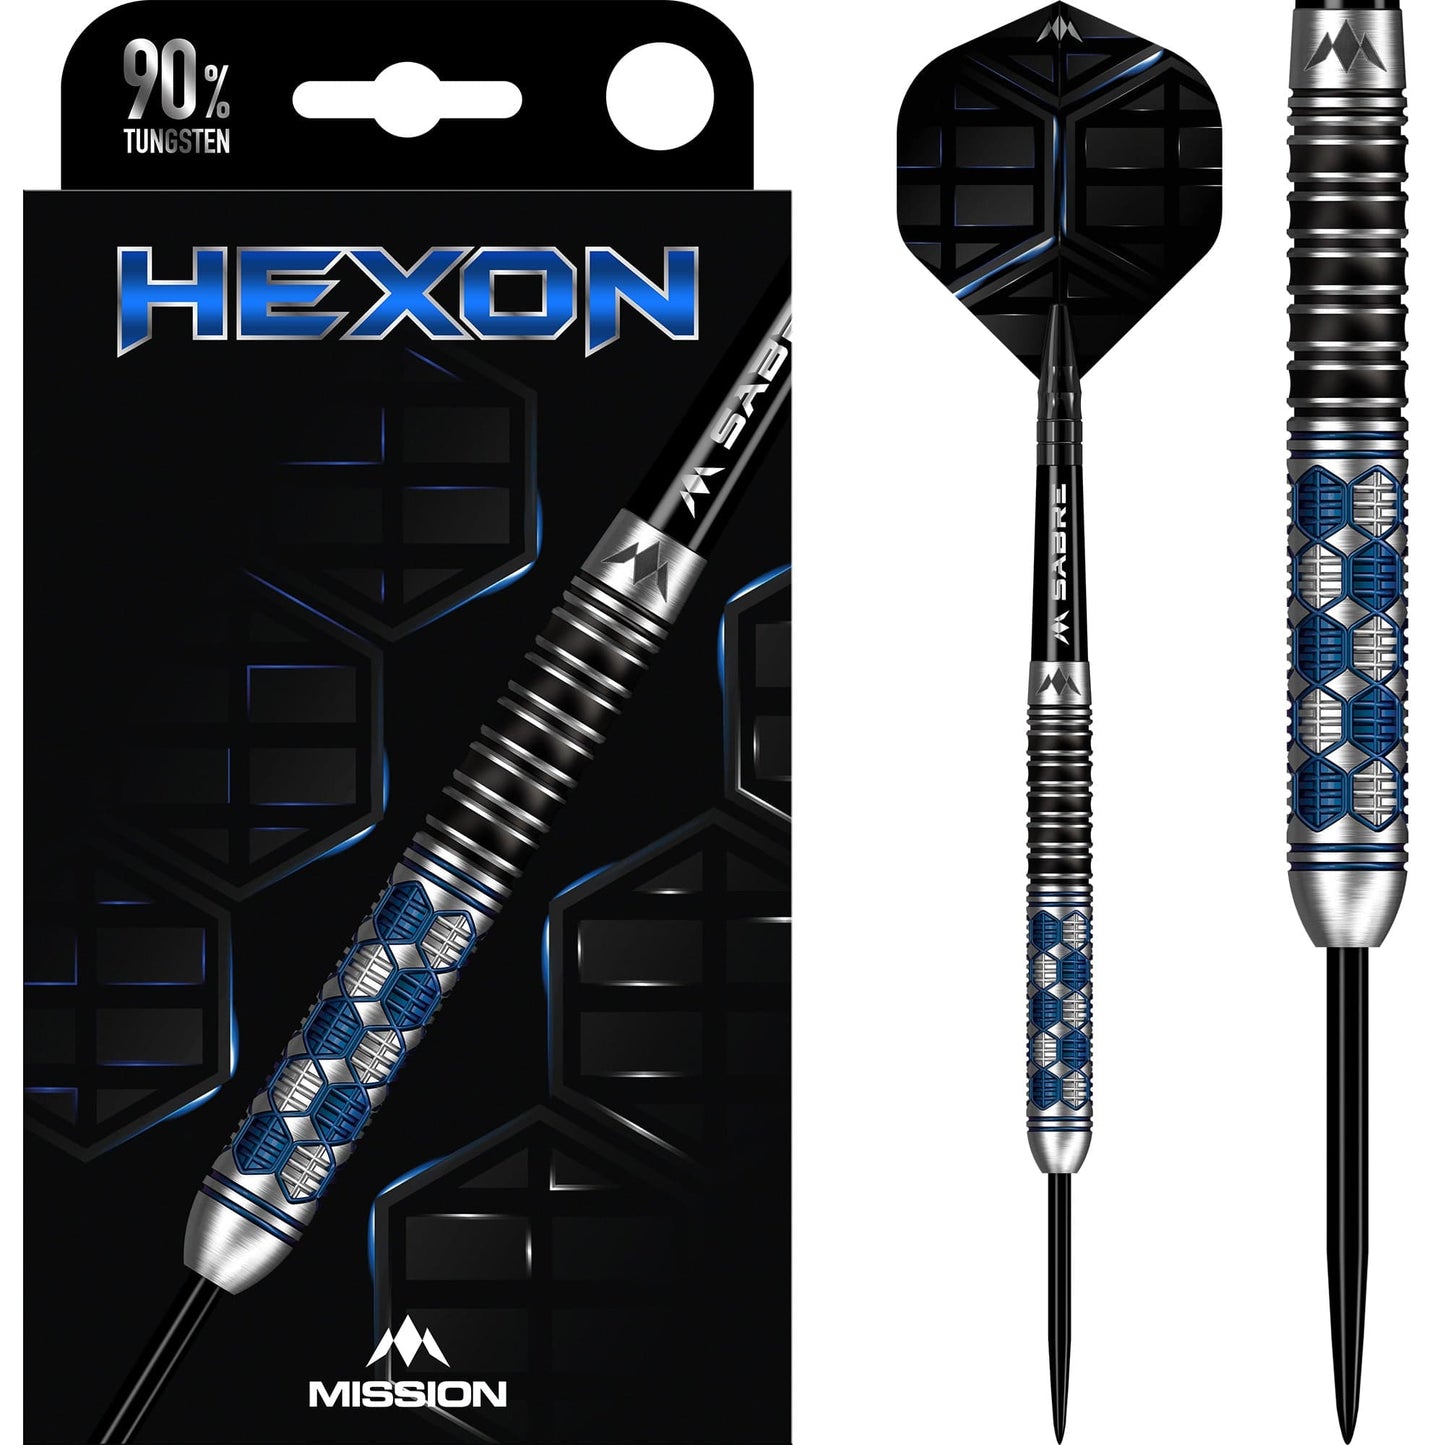 Mission Hexon Darts - Steel Tip - 90% - Blue PVD 21g